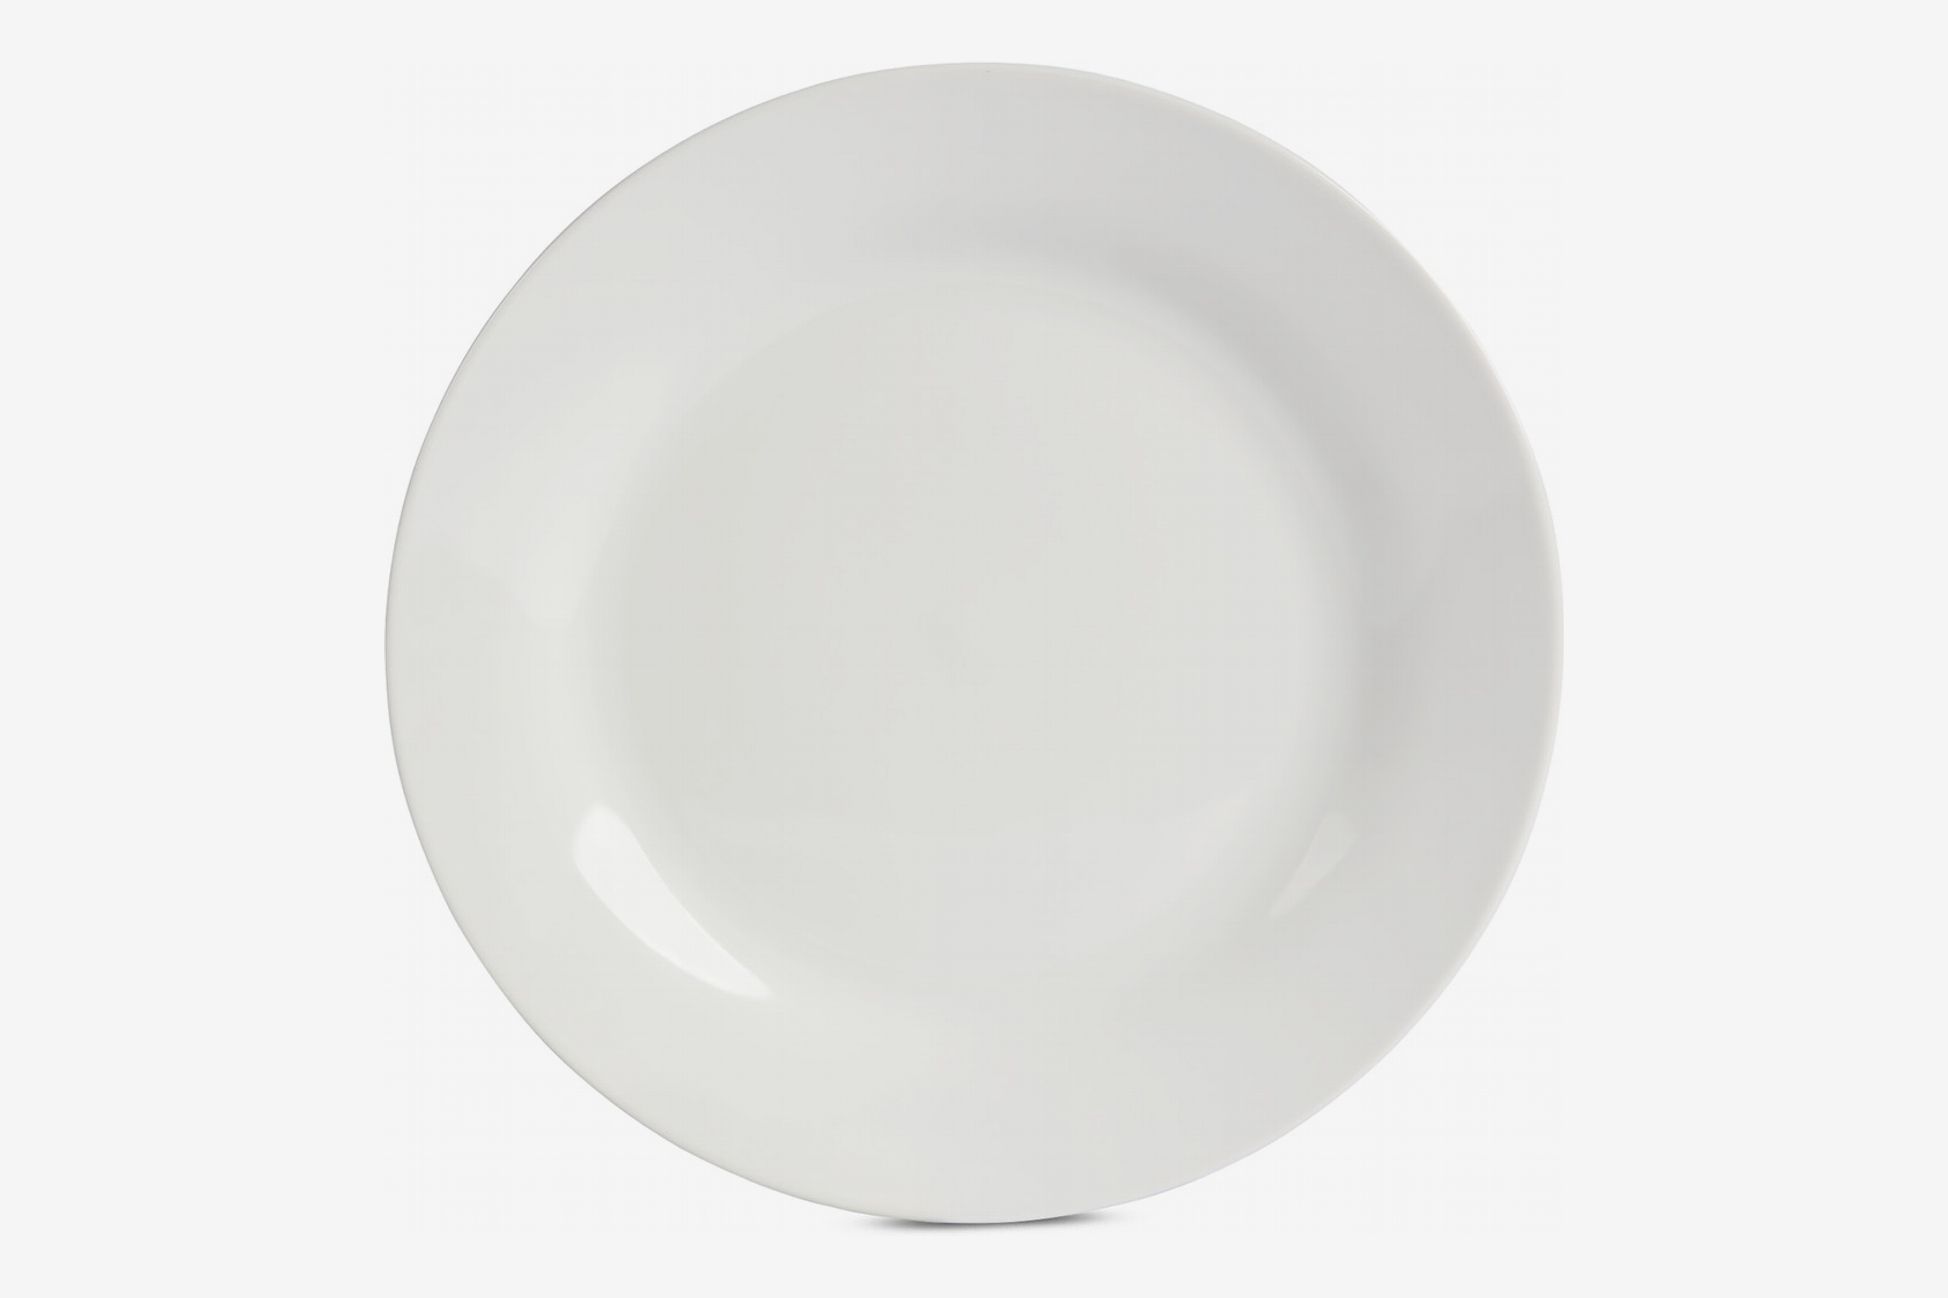 Set 1 FELIT WHITE EUROPEAN porcelain round  dinner plates main course 24cm 